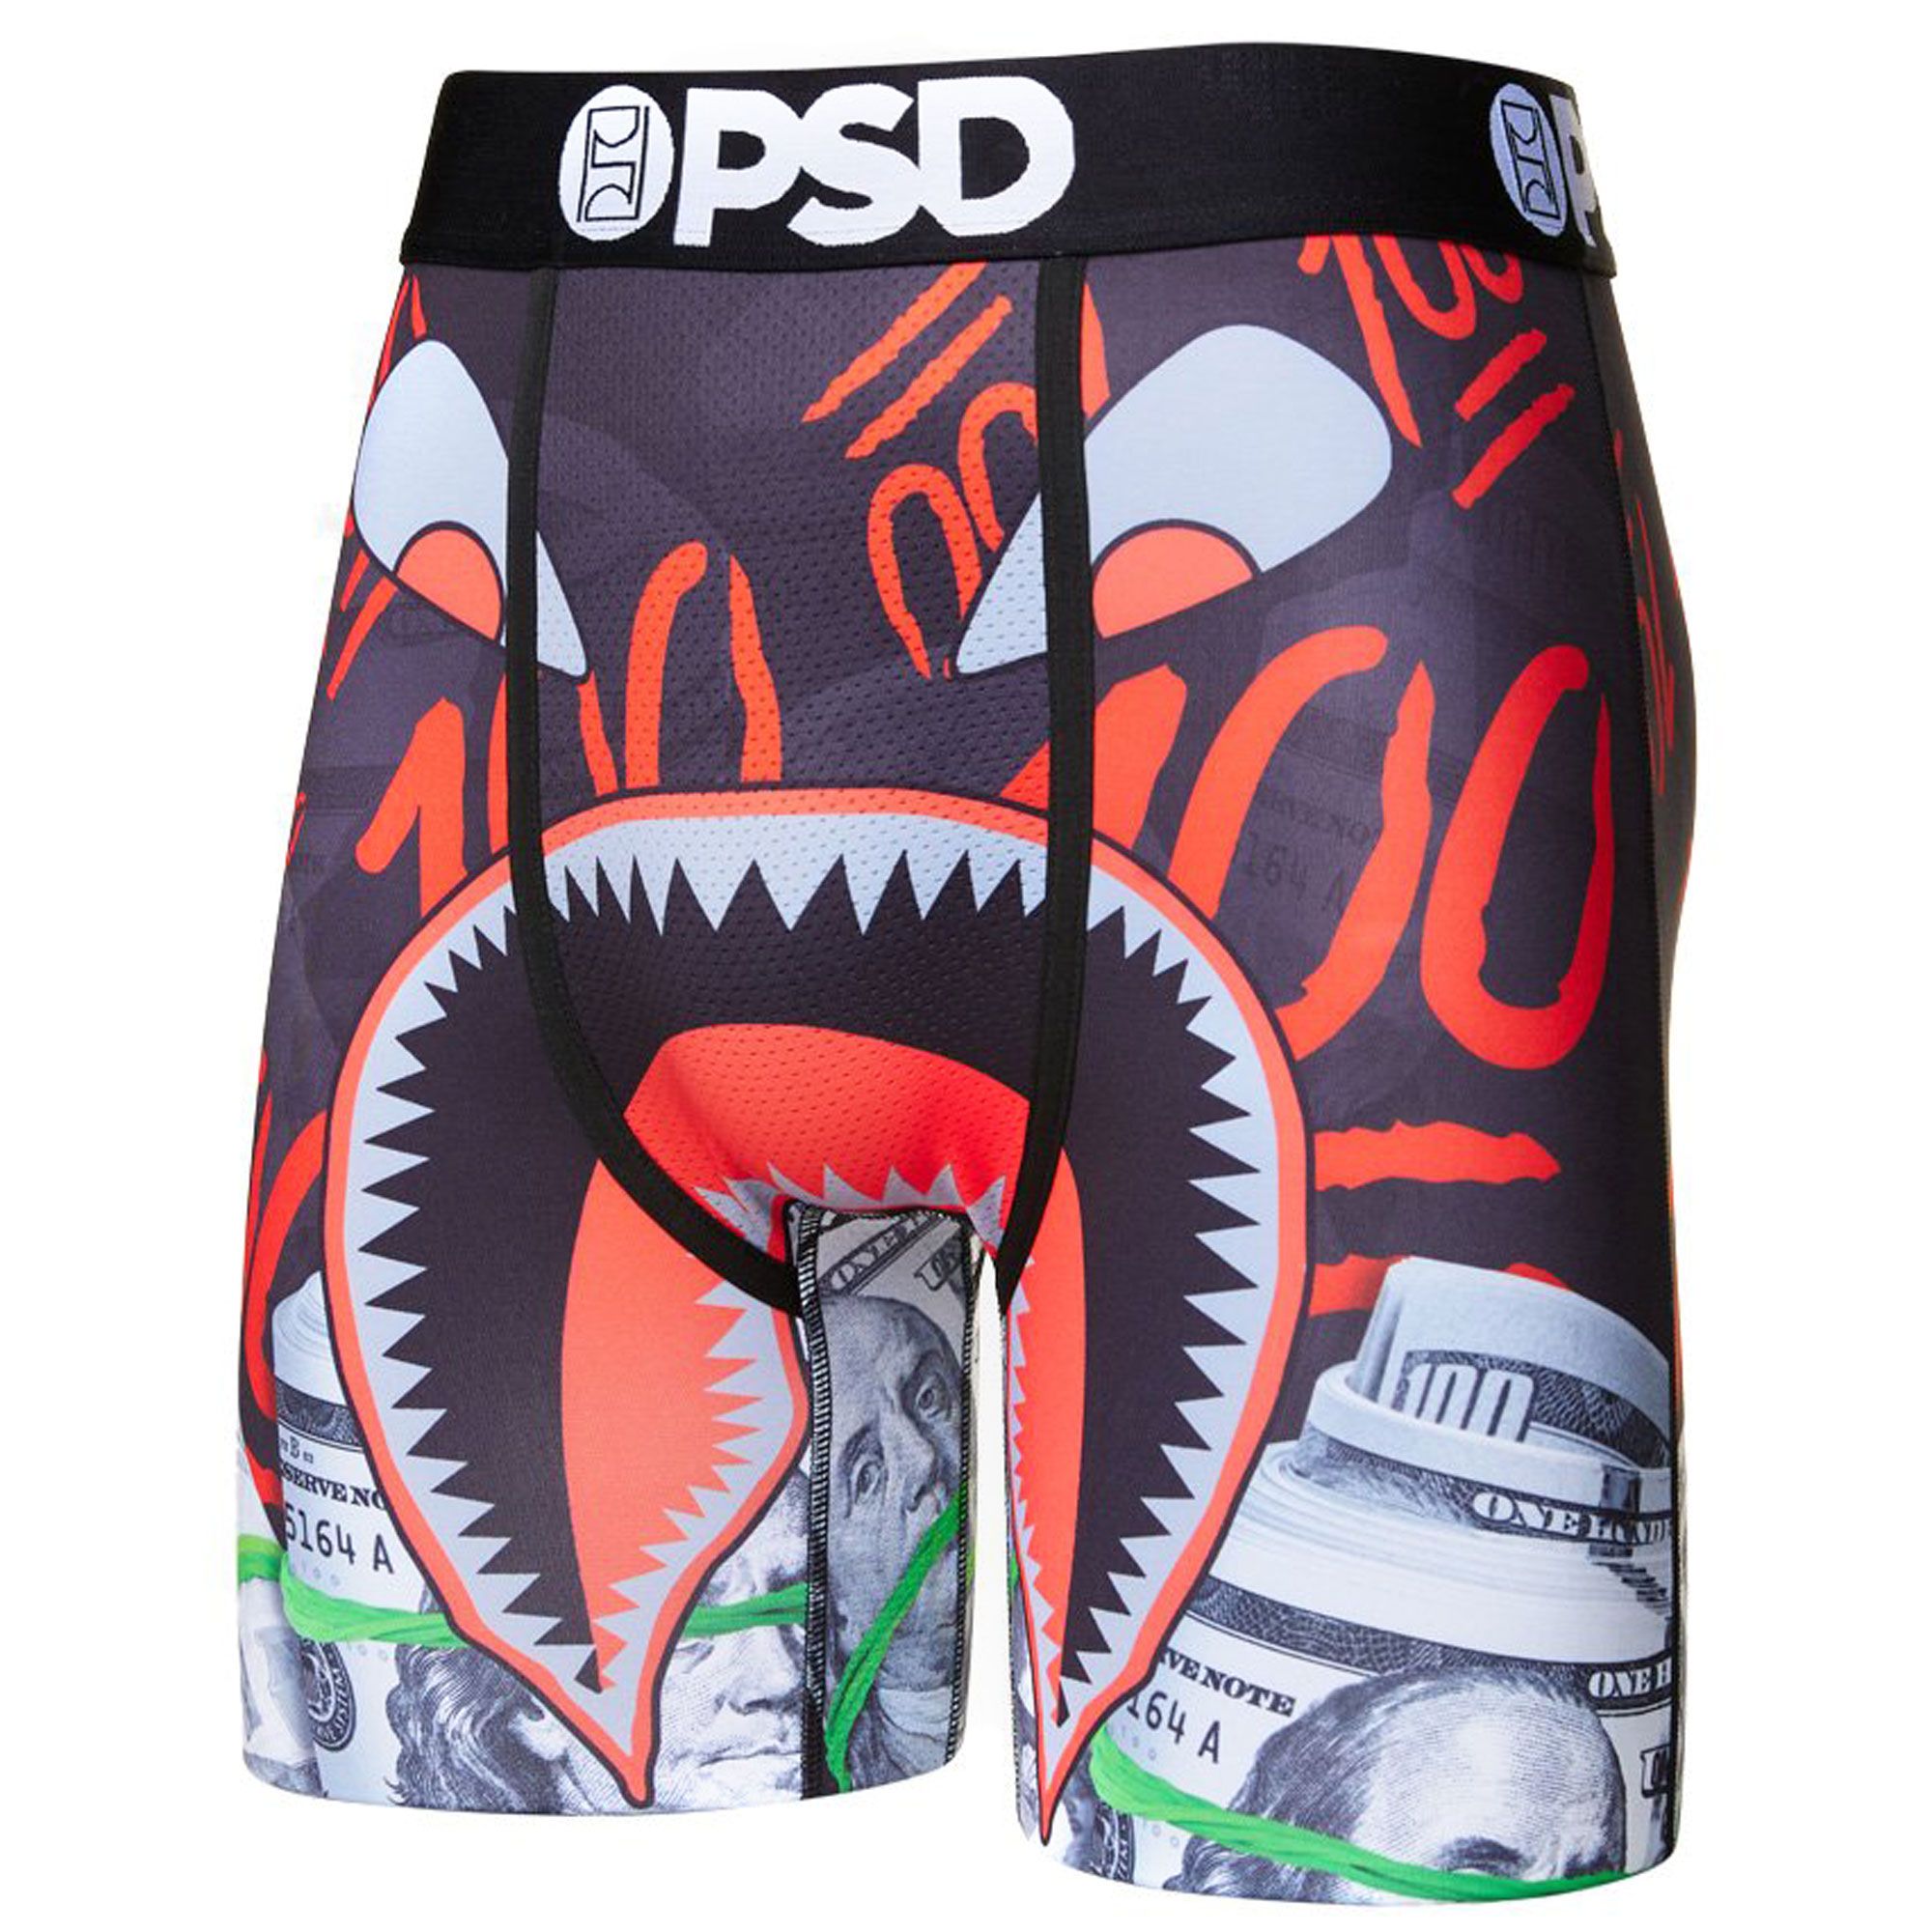 PSD Underwear Men's Boxer Brief Gray Warface L Black